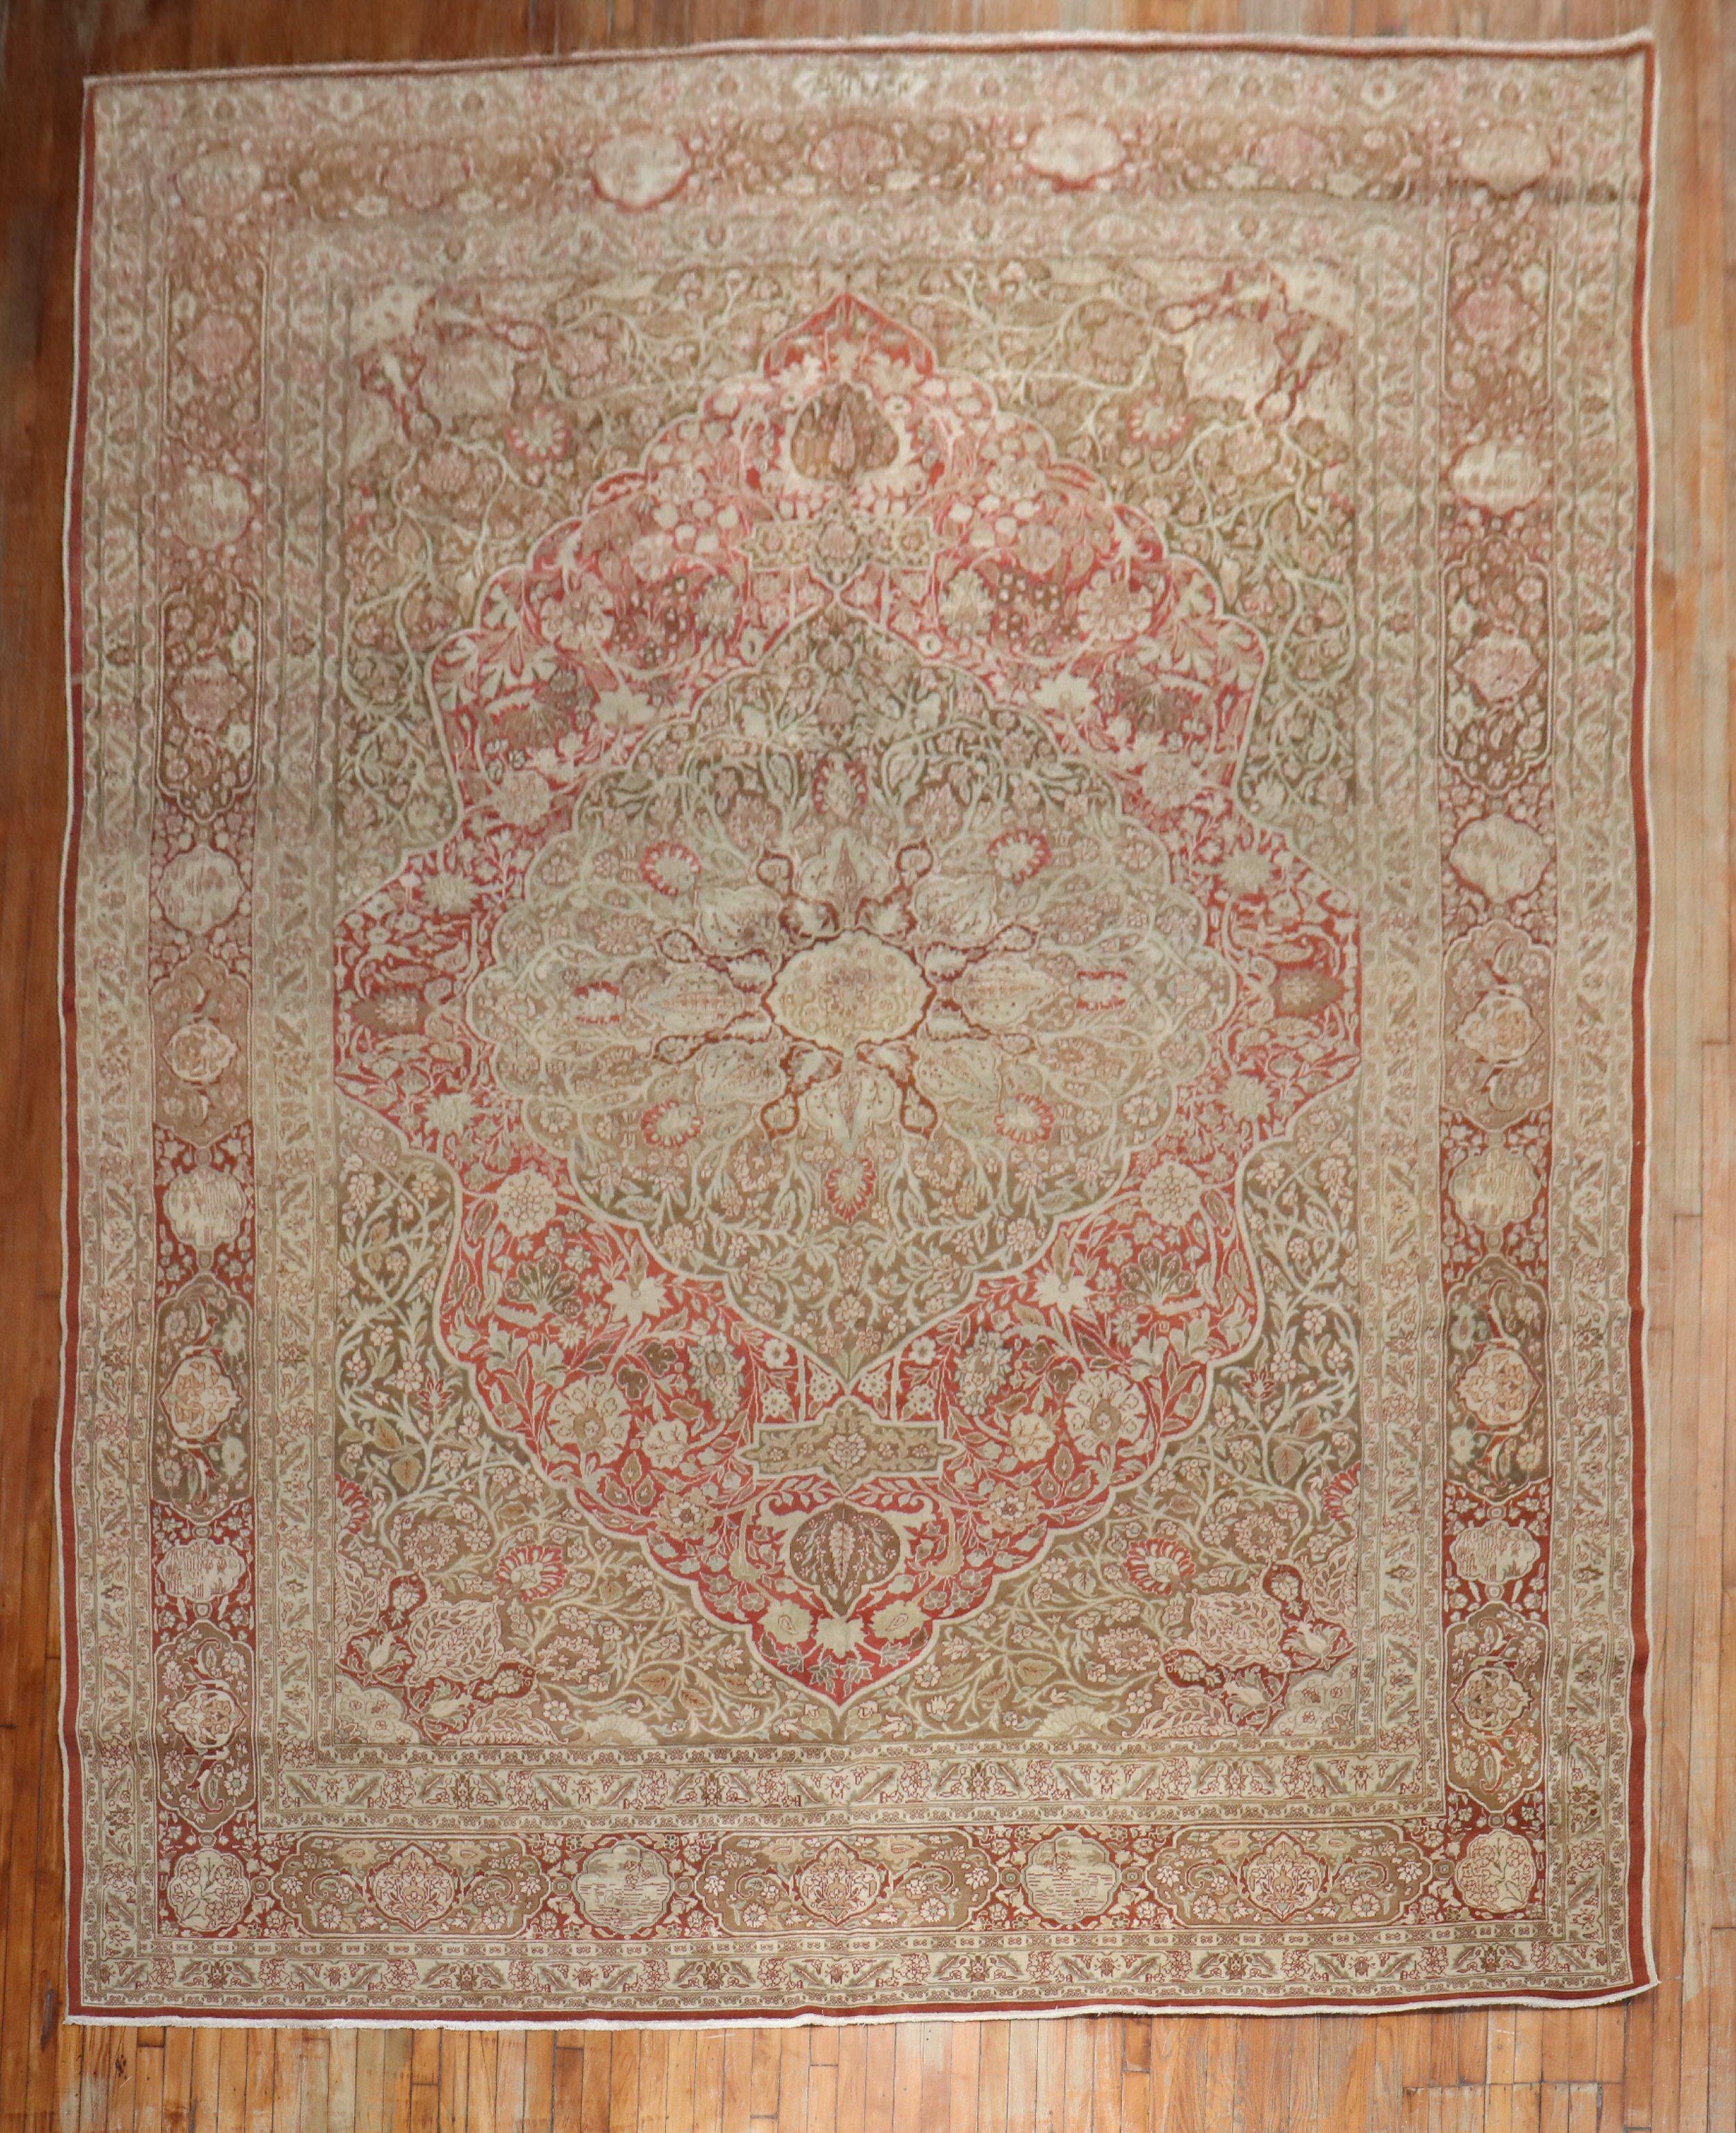 Hand-Woven Elegant Oversize Brown Antique Persian Tabriz Carpet For Sale